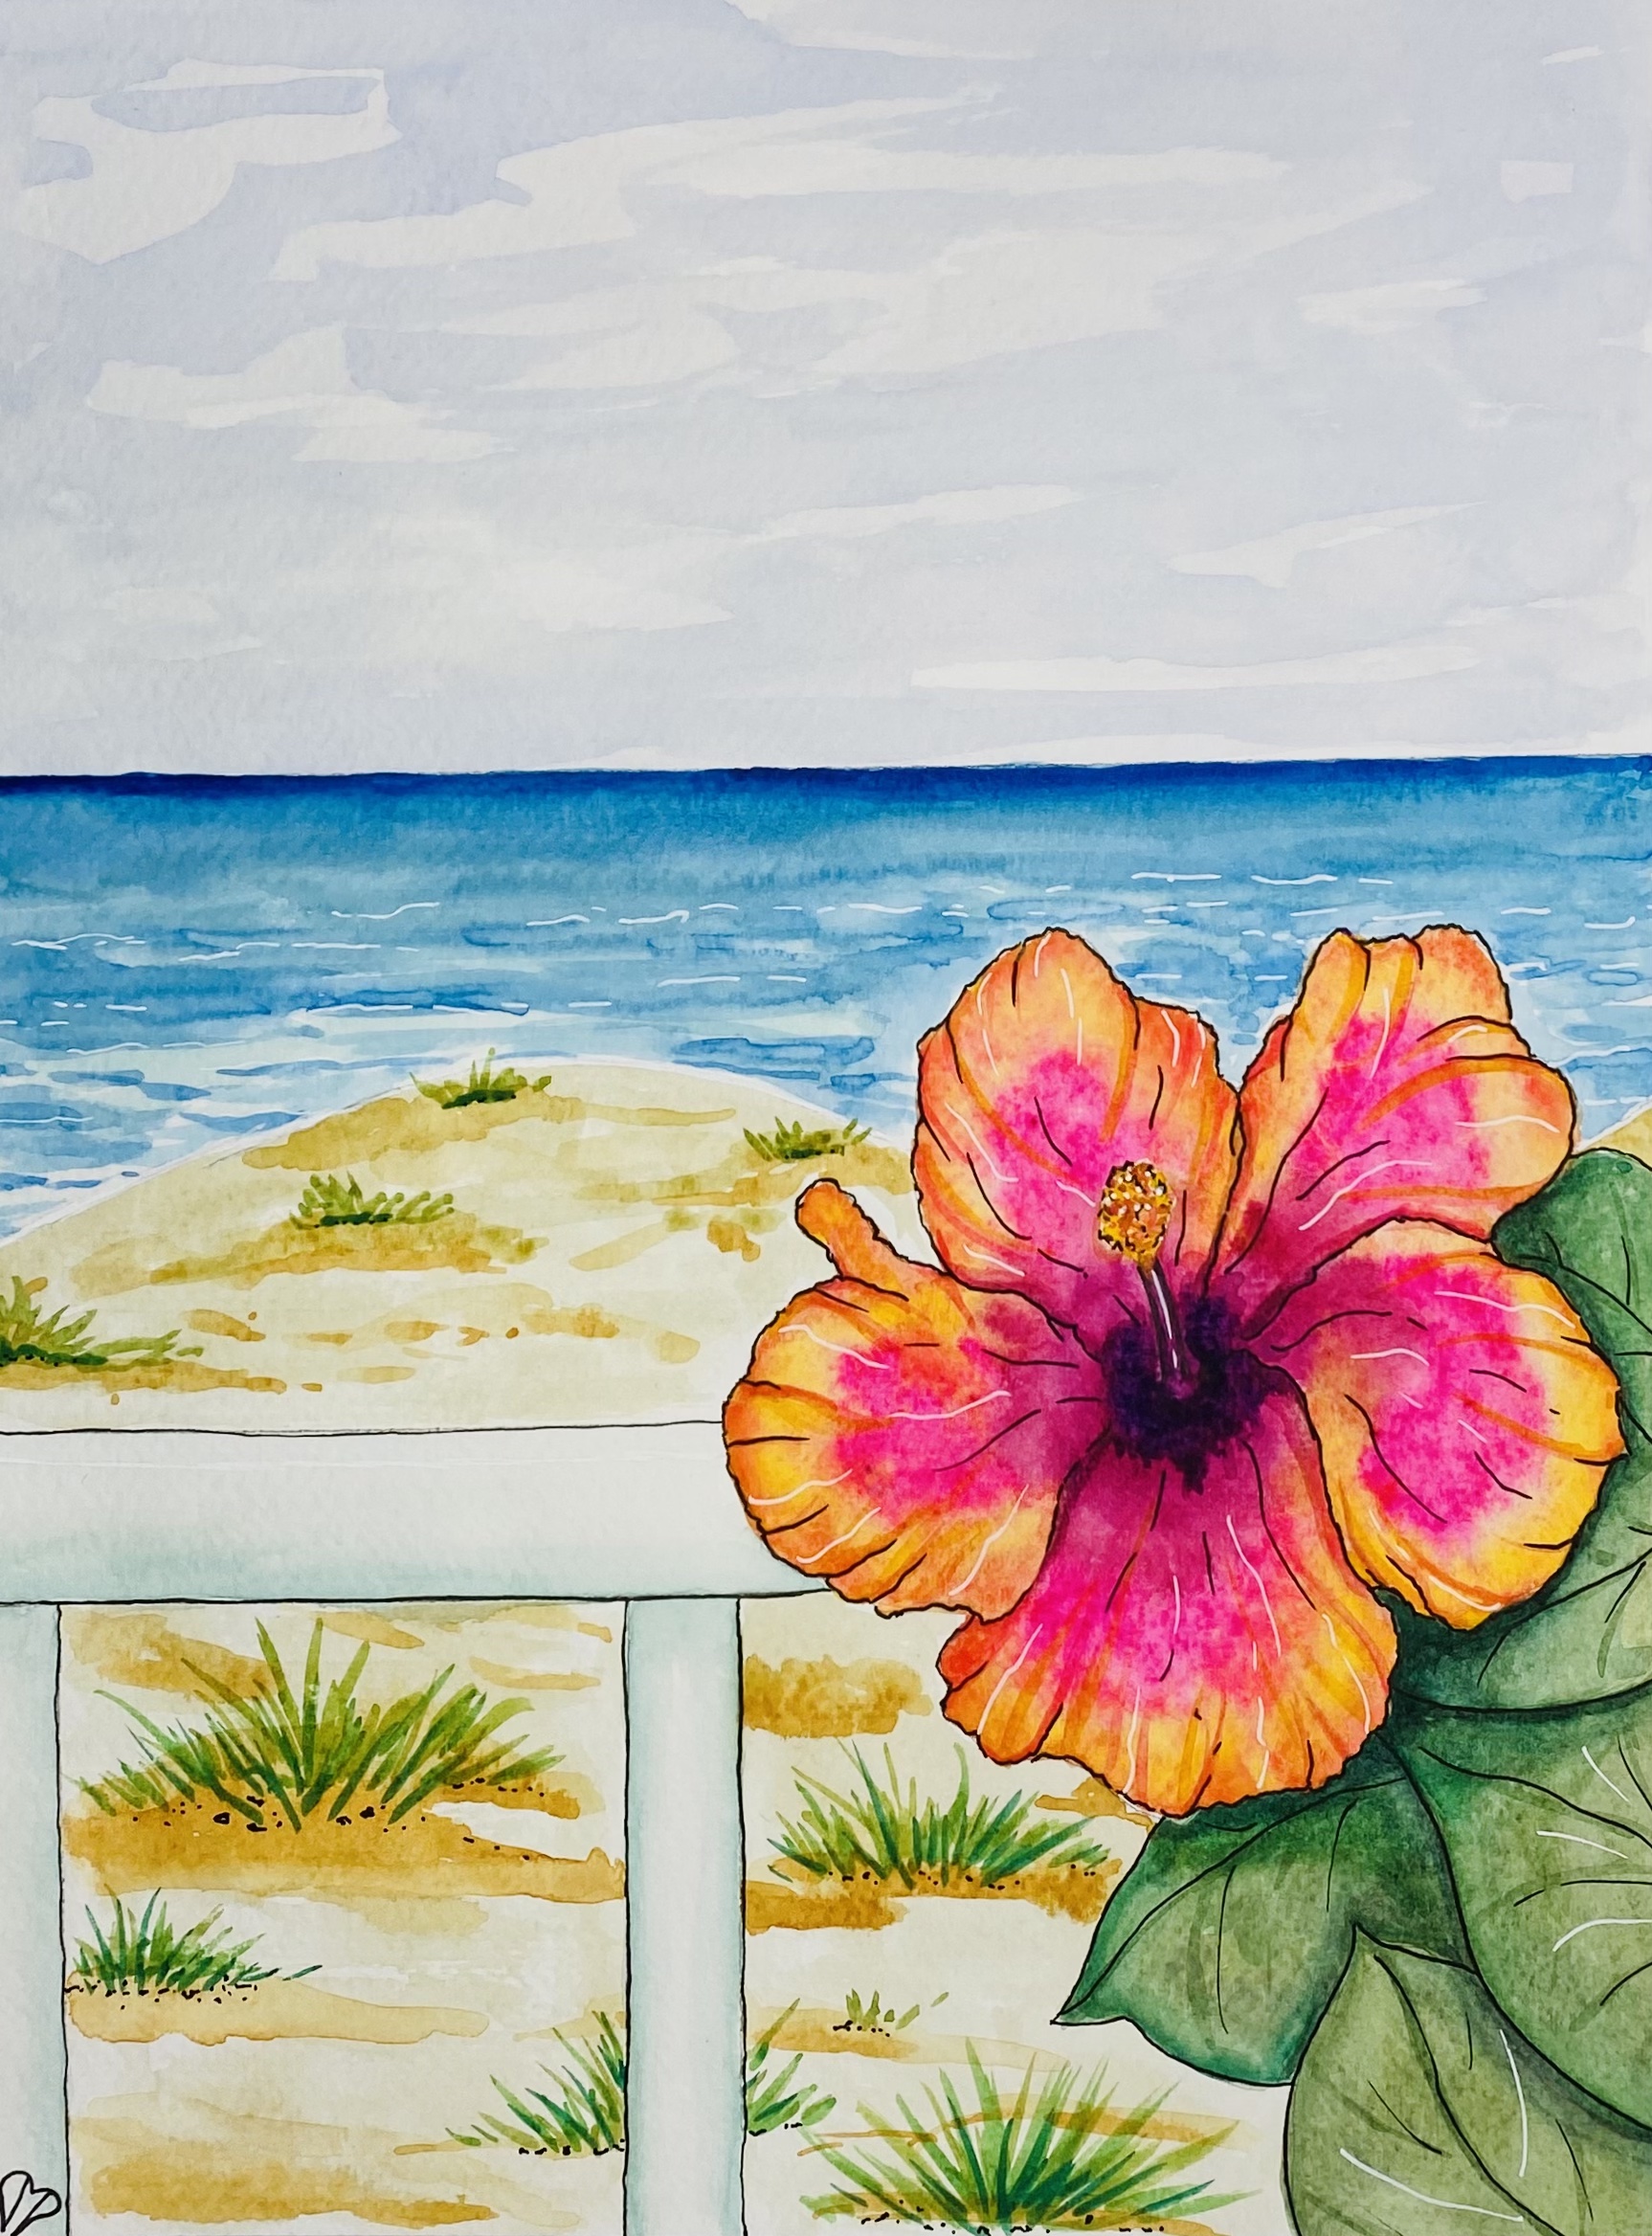 "Hibiscus at the Sea," by Dawn Marie Paul 9x12 inch Watercolor and Ink Original Art by Dawn Marie Paul at DMPaul.com